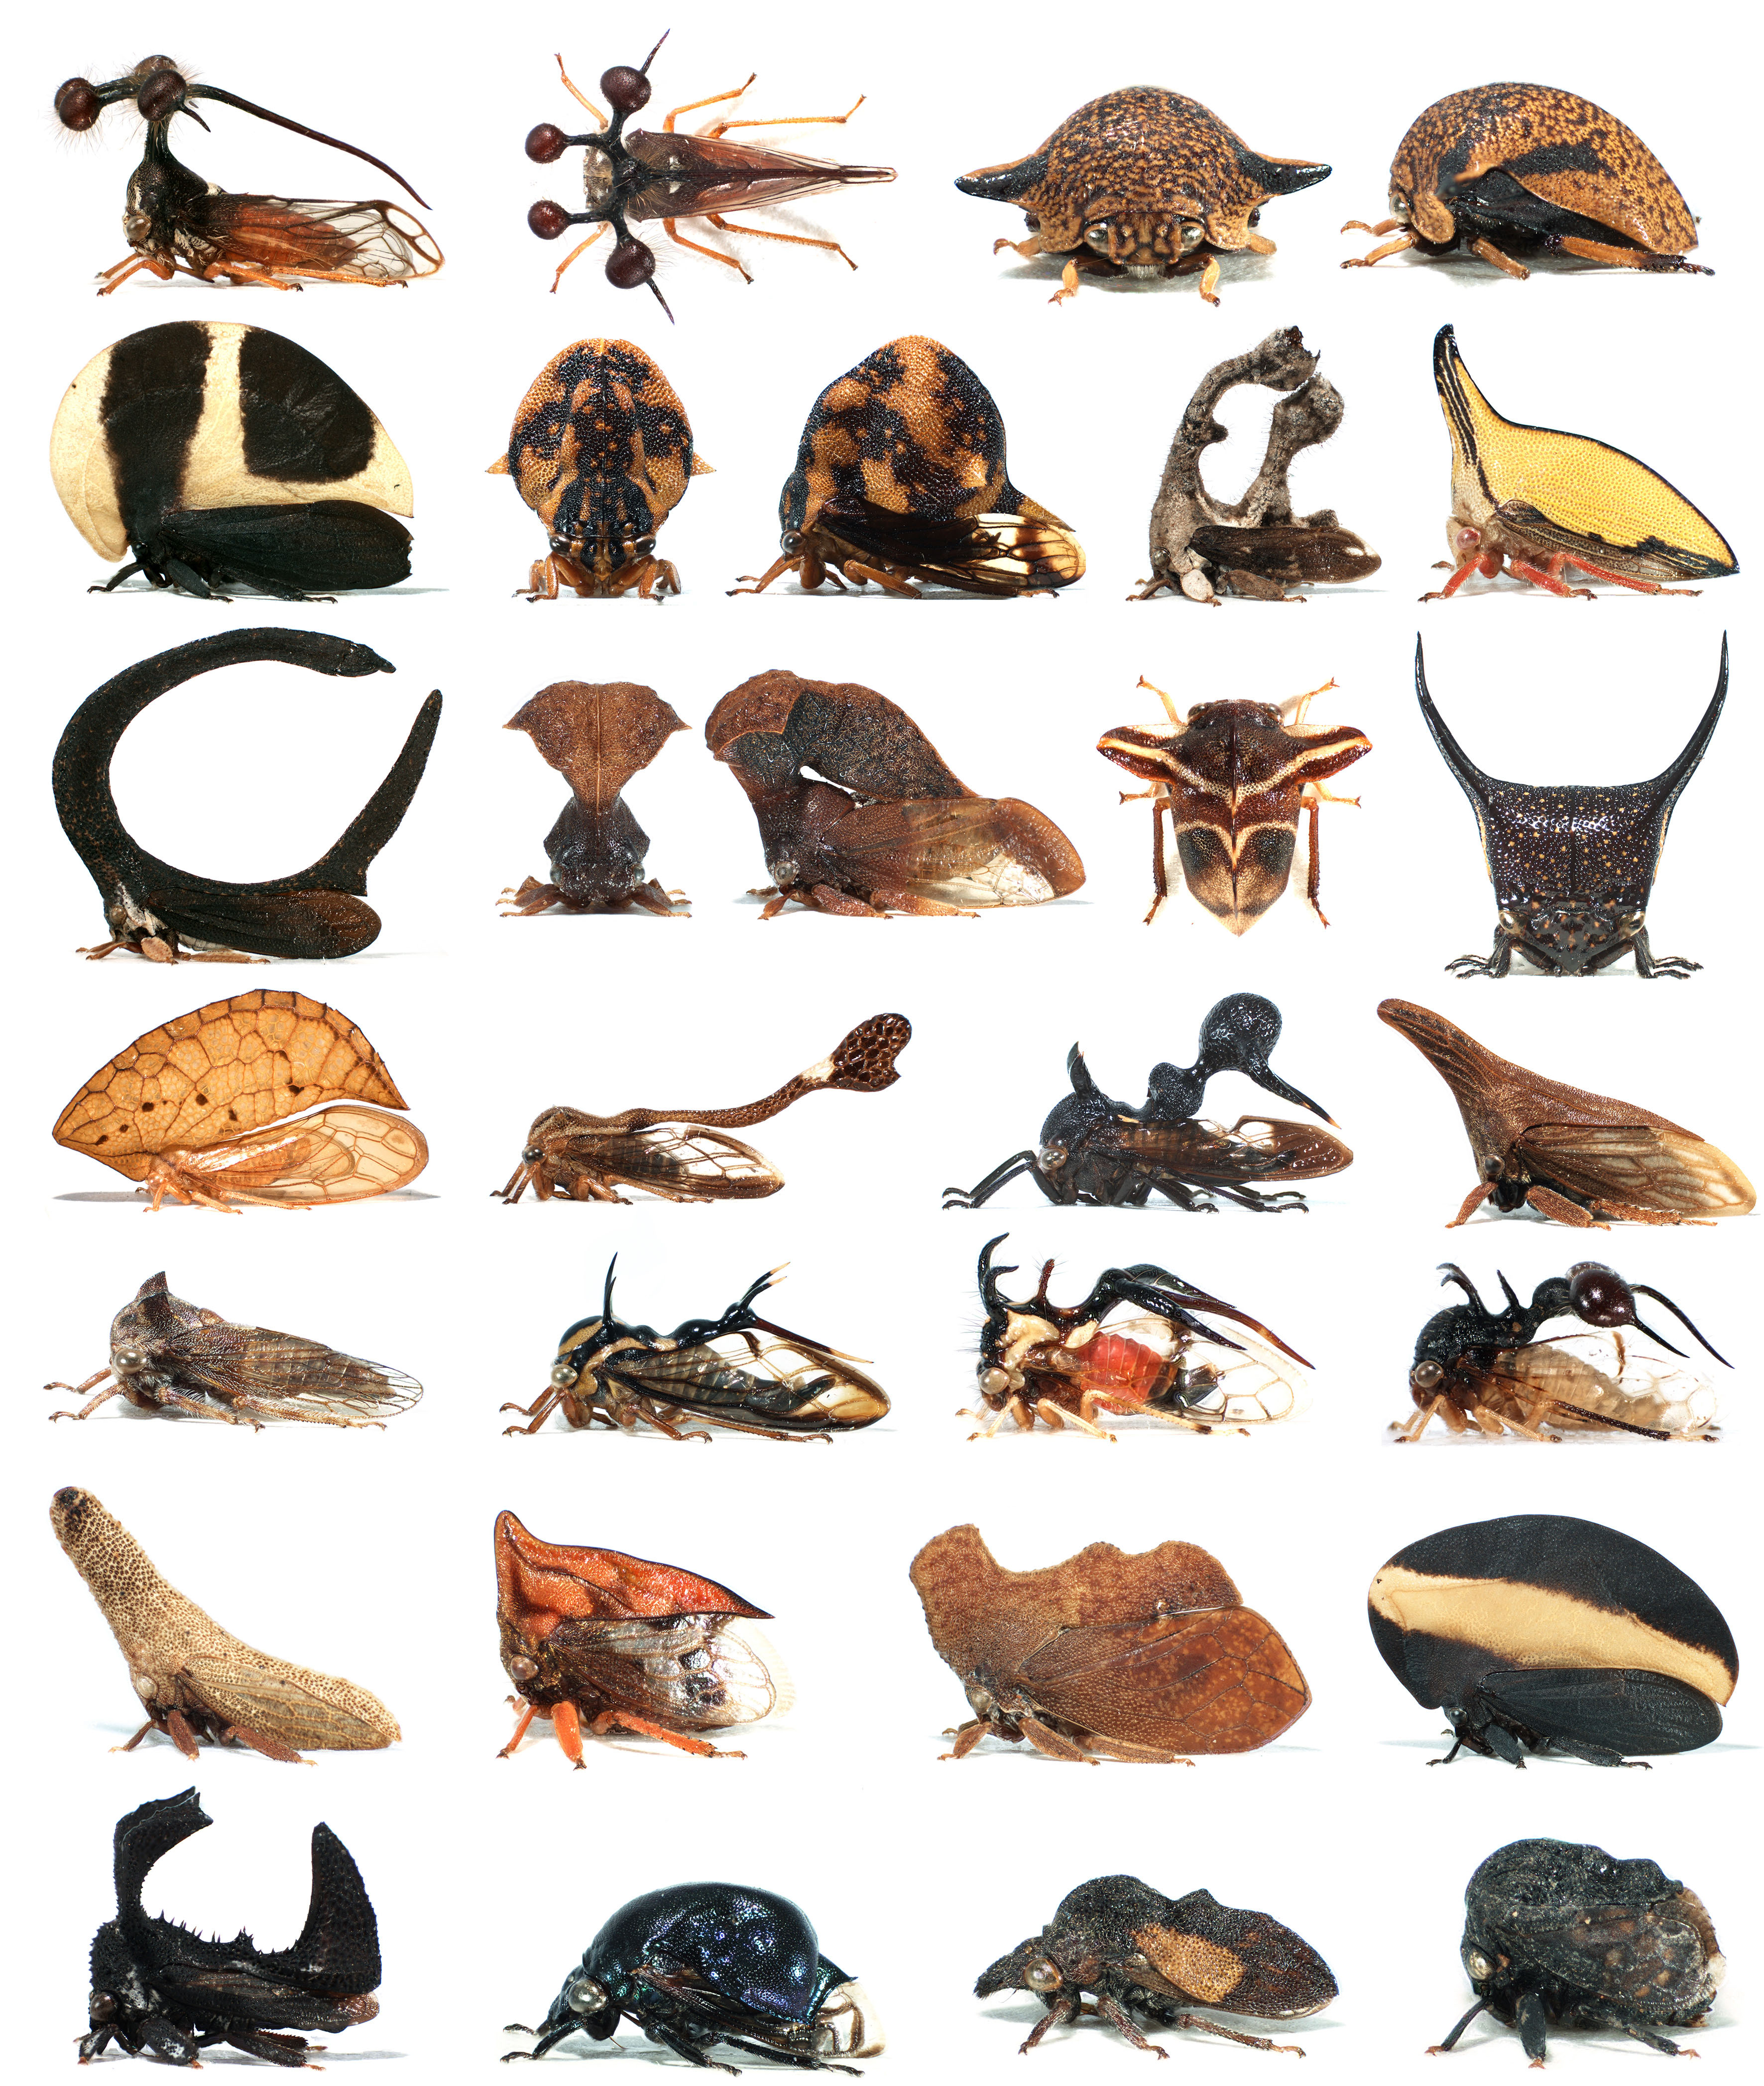 Membracidae (treehoppers)